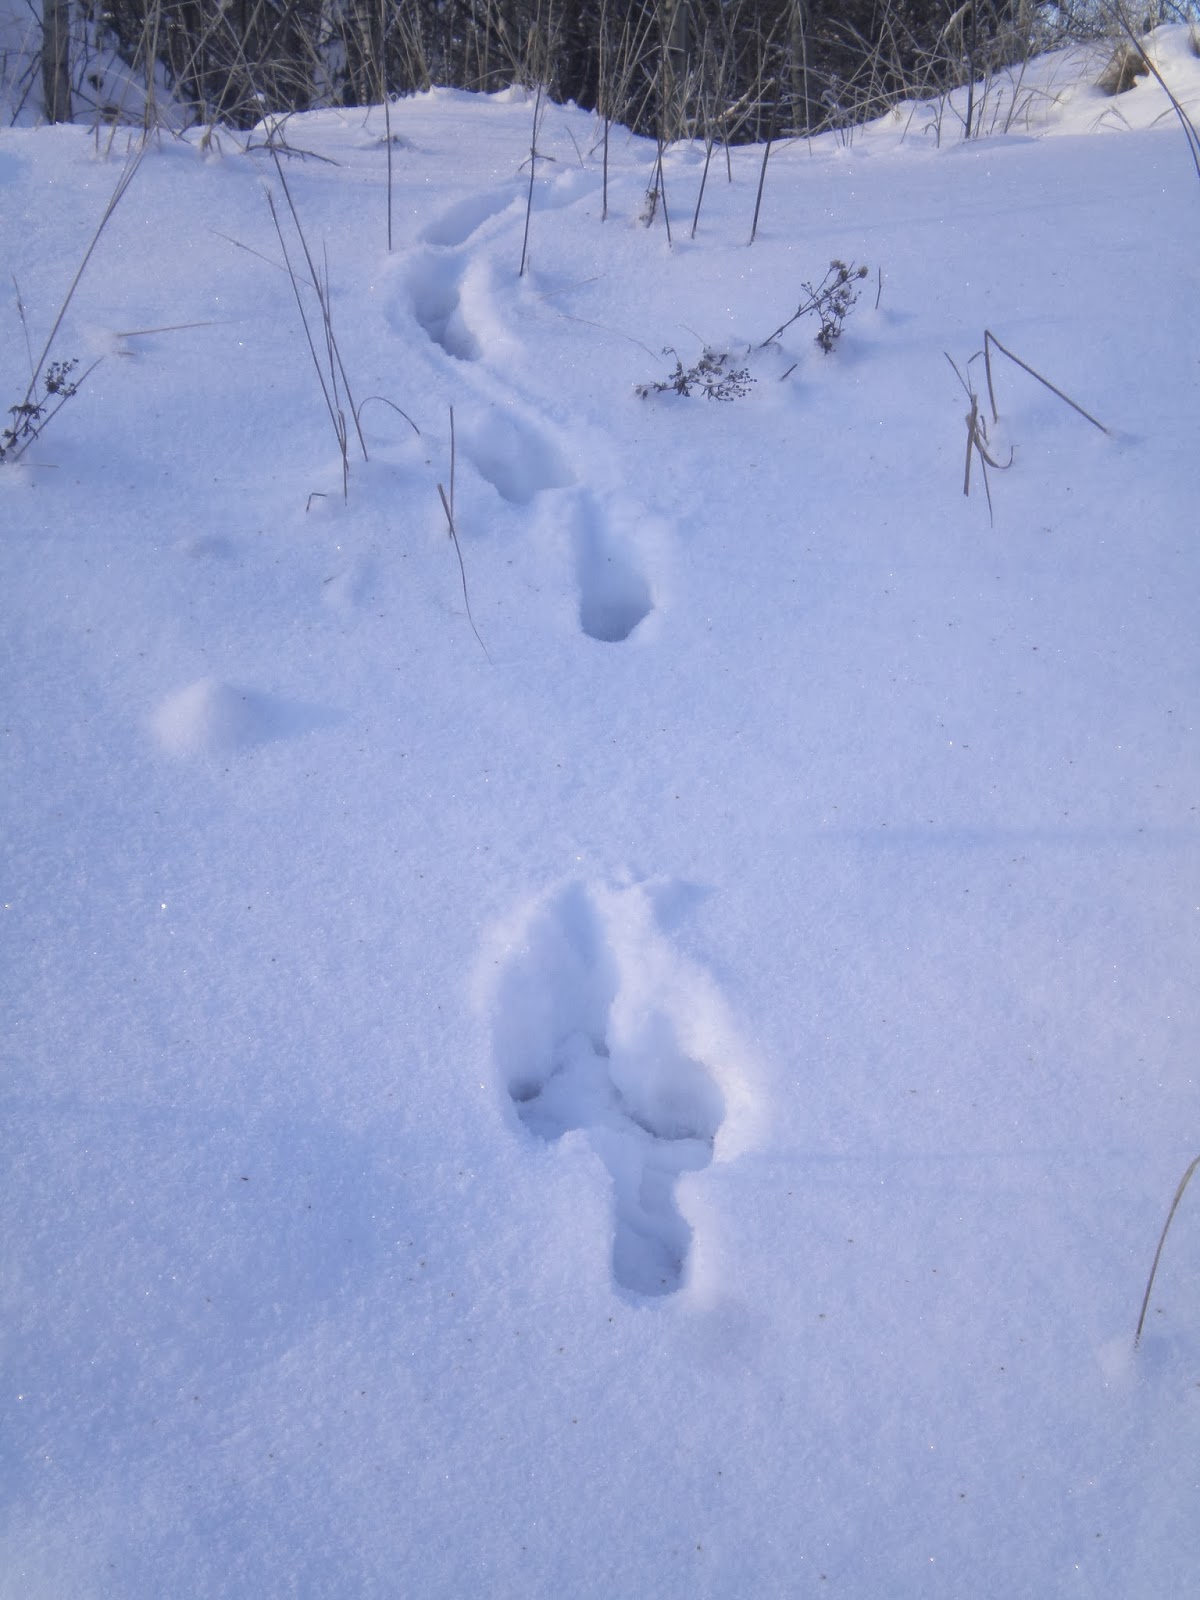 Заячьи и лисьи следы на снегу. Заячьи следы в лесу зимой. Заячьи следы. Лисьи следы на снегу фото.